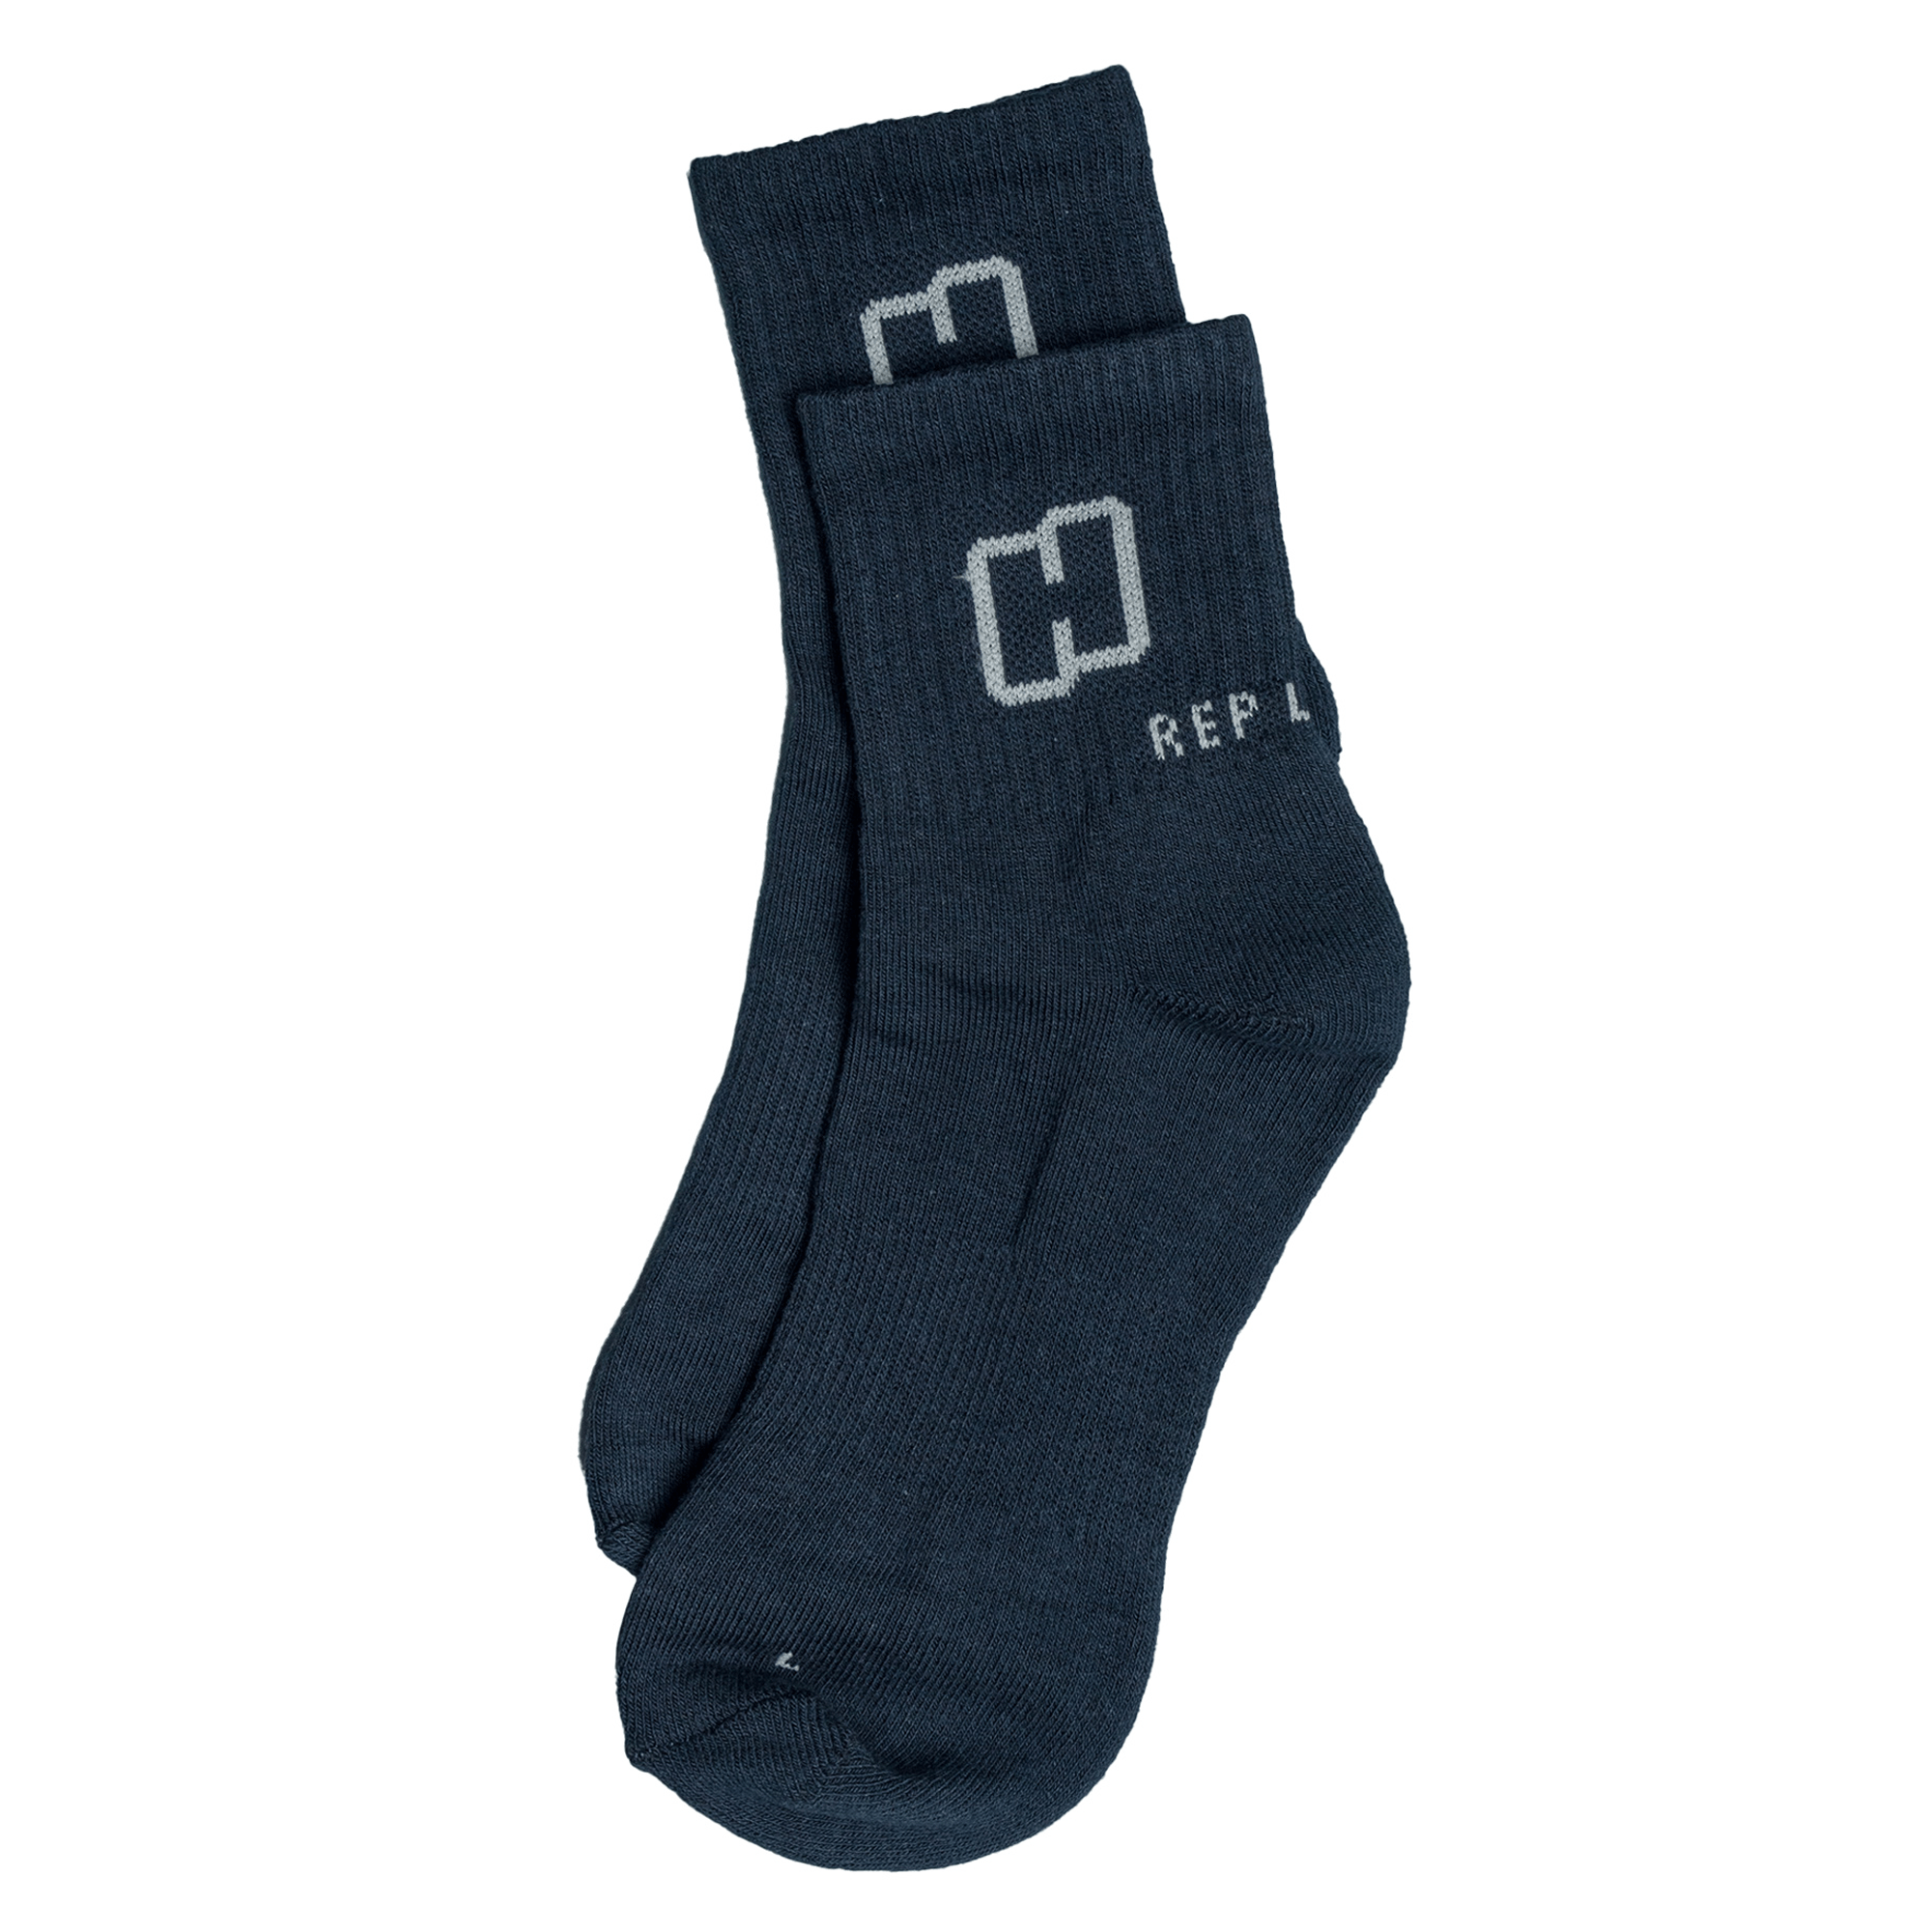 H103 Socks - Navy Blue